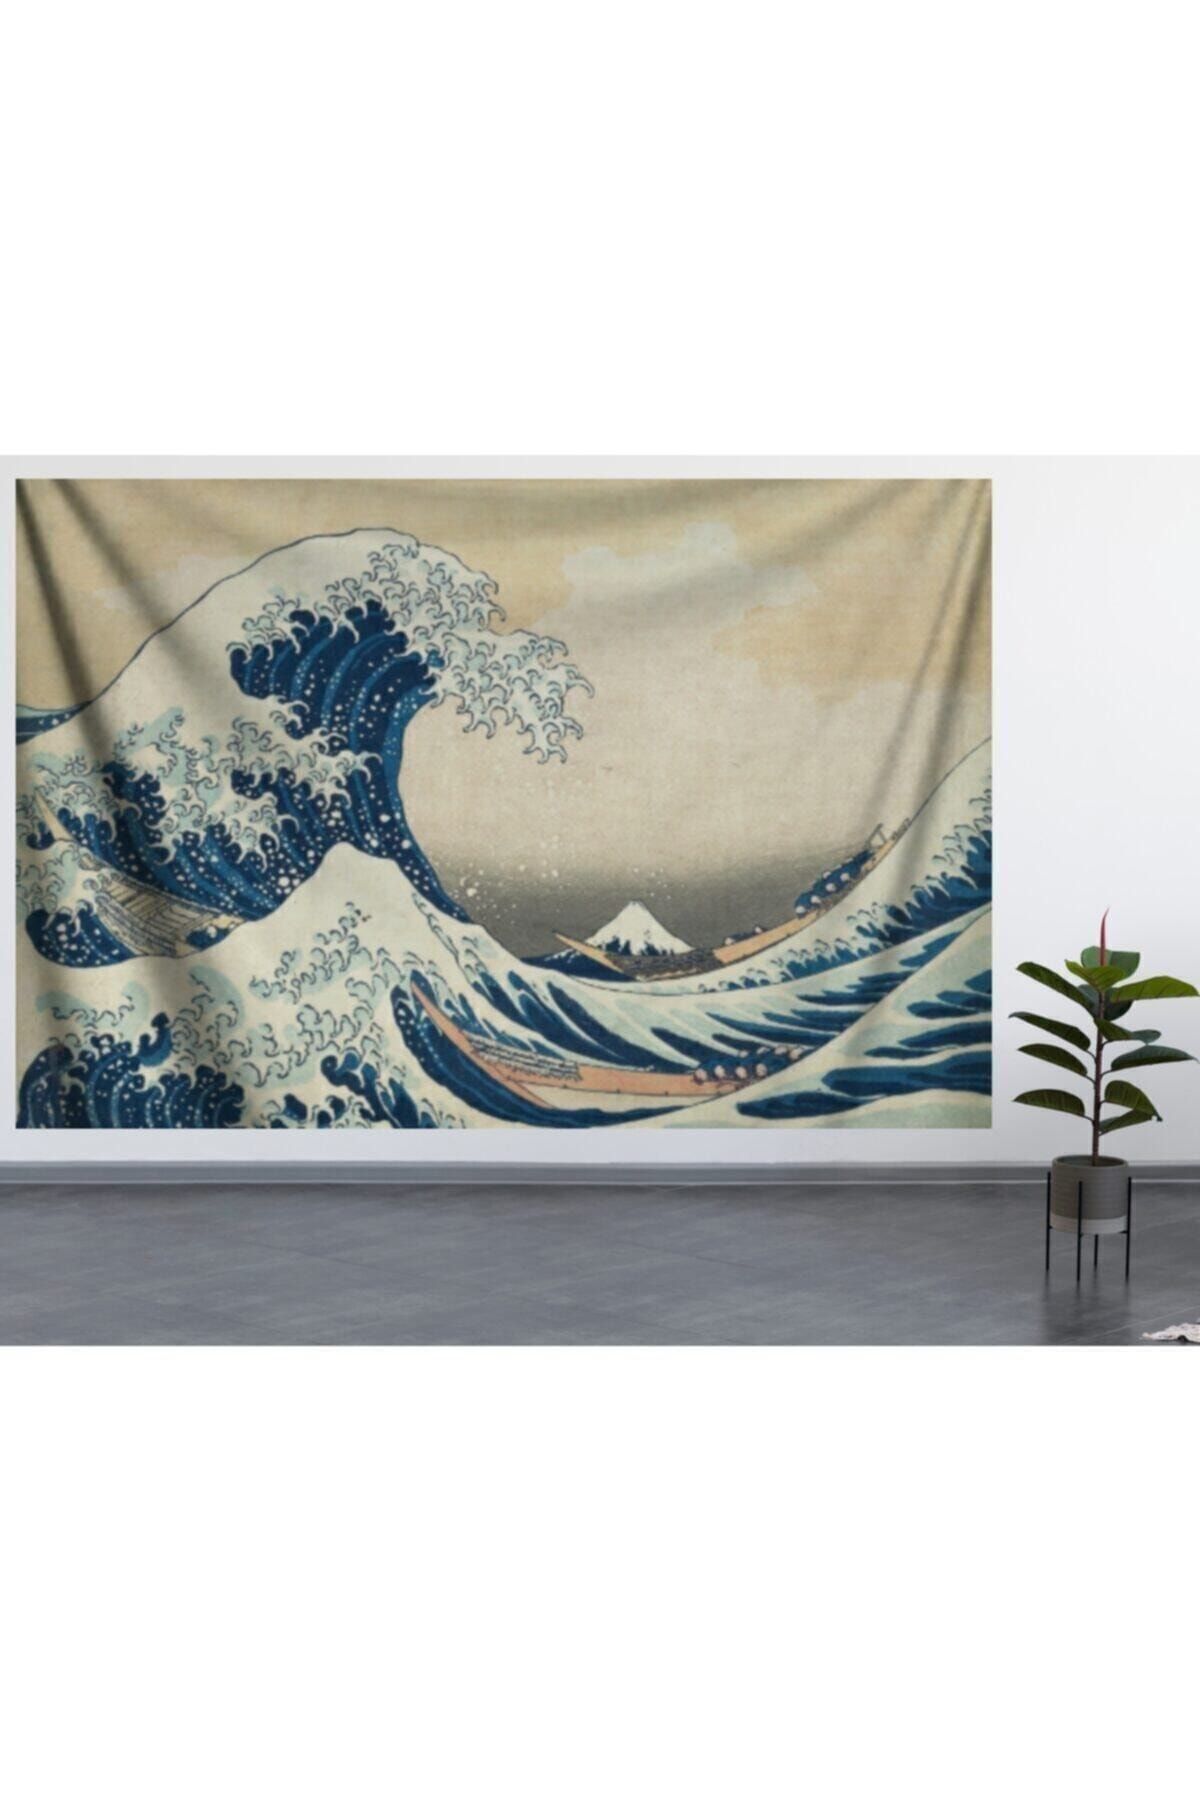 ALAMODE Kanagawa'nın Büyük Dalgası Model Duvar Örtüsü (70X100, 100X140, 140X200)